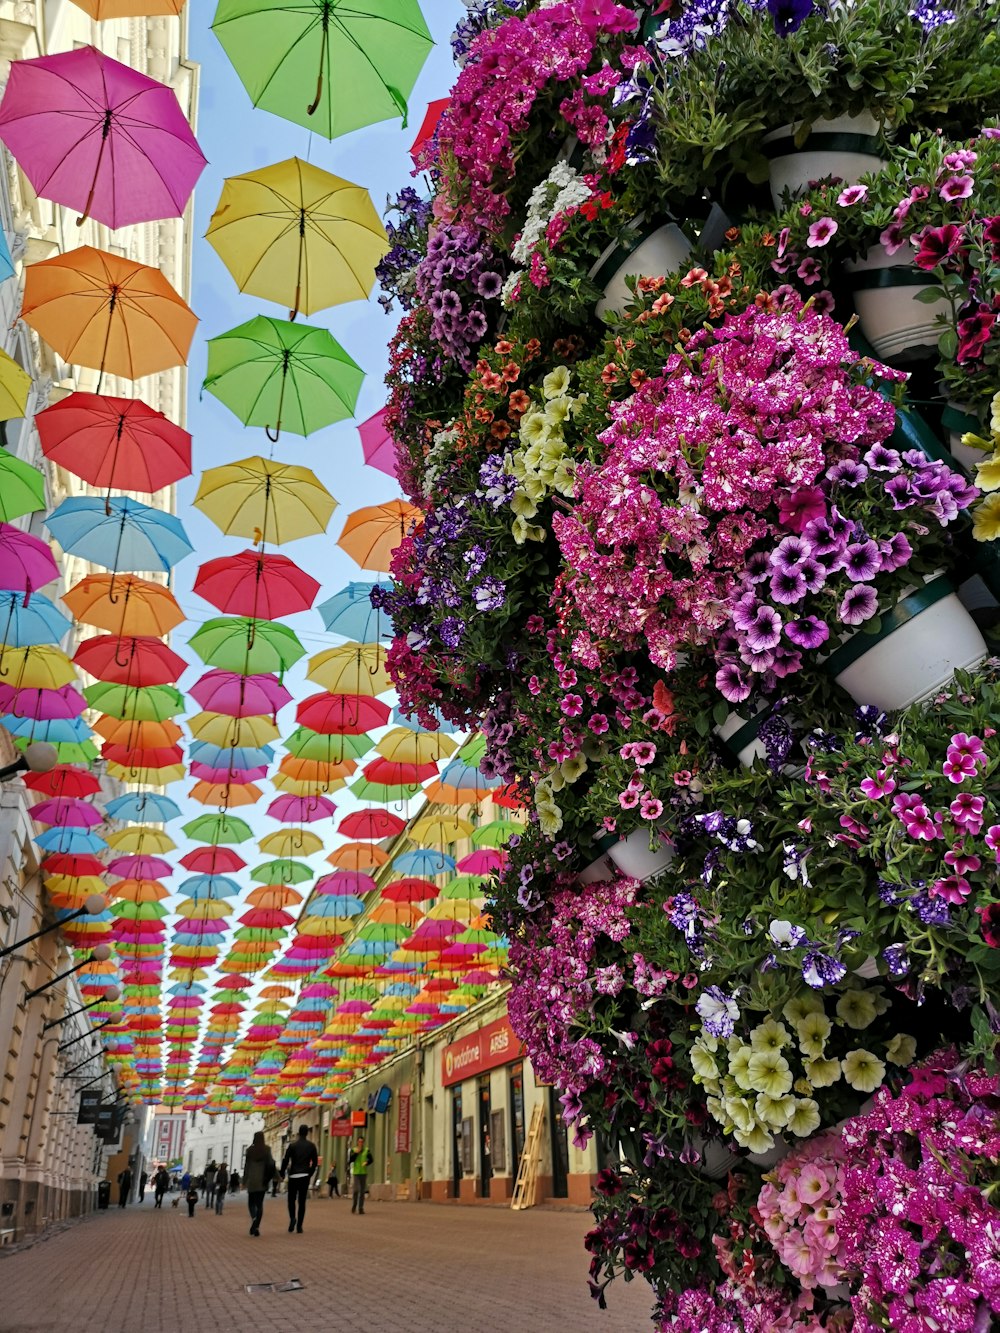 flower and umbrella festival